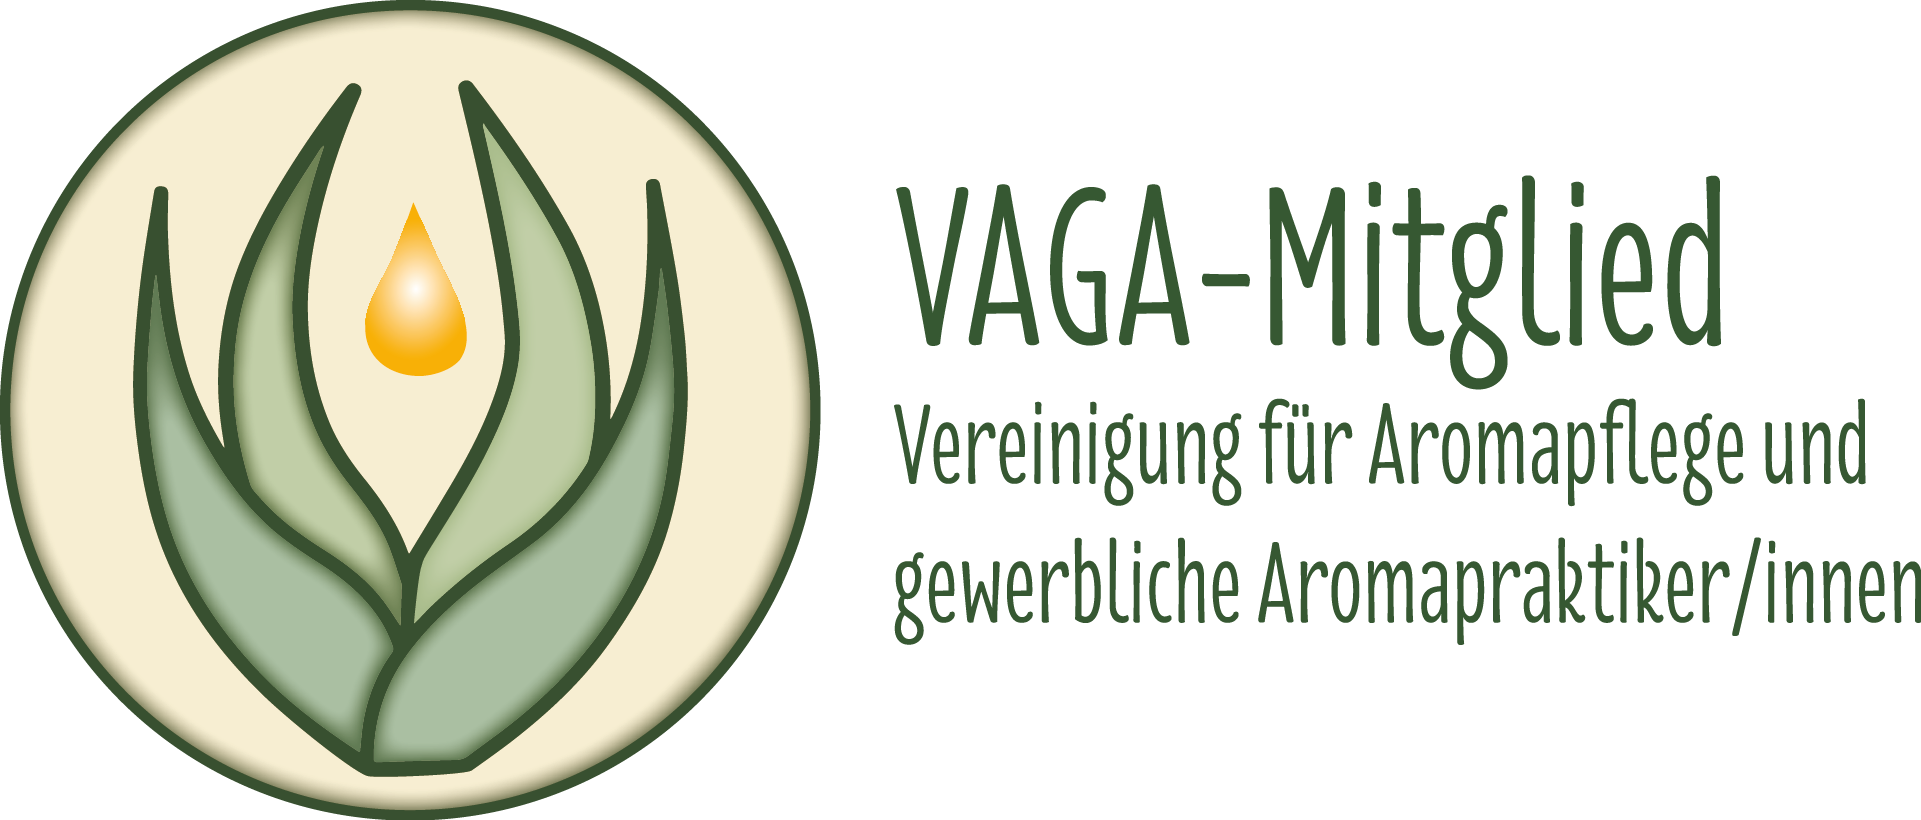 VAGA-Mitglied-Logo